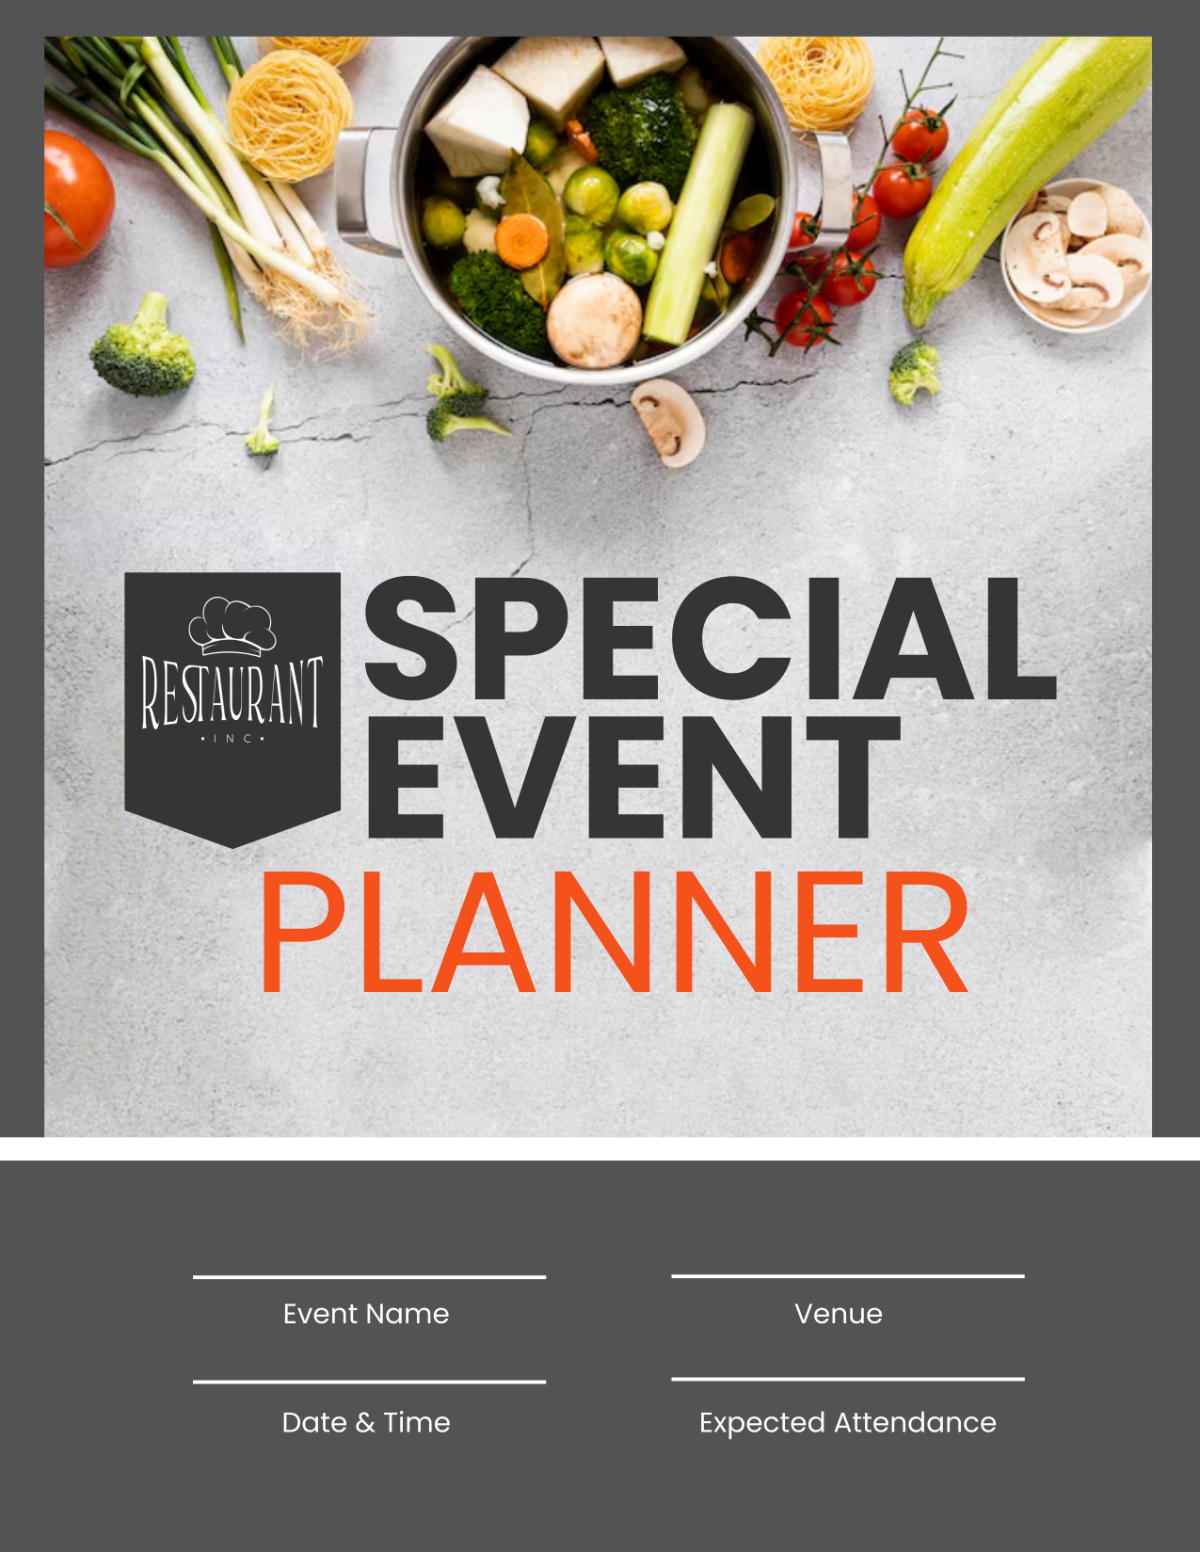 Restaurant Special Event Planner